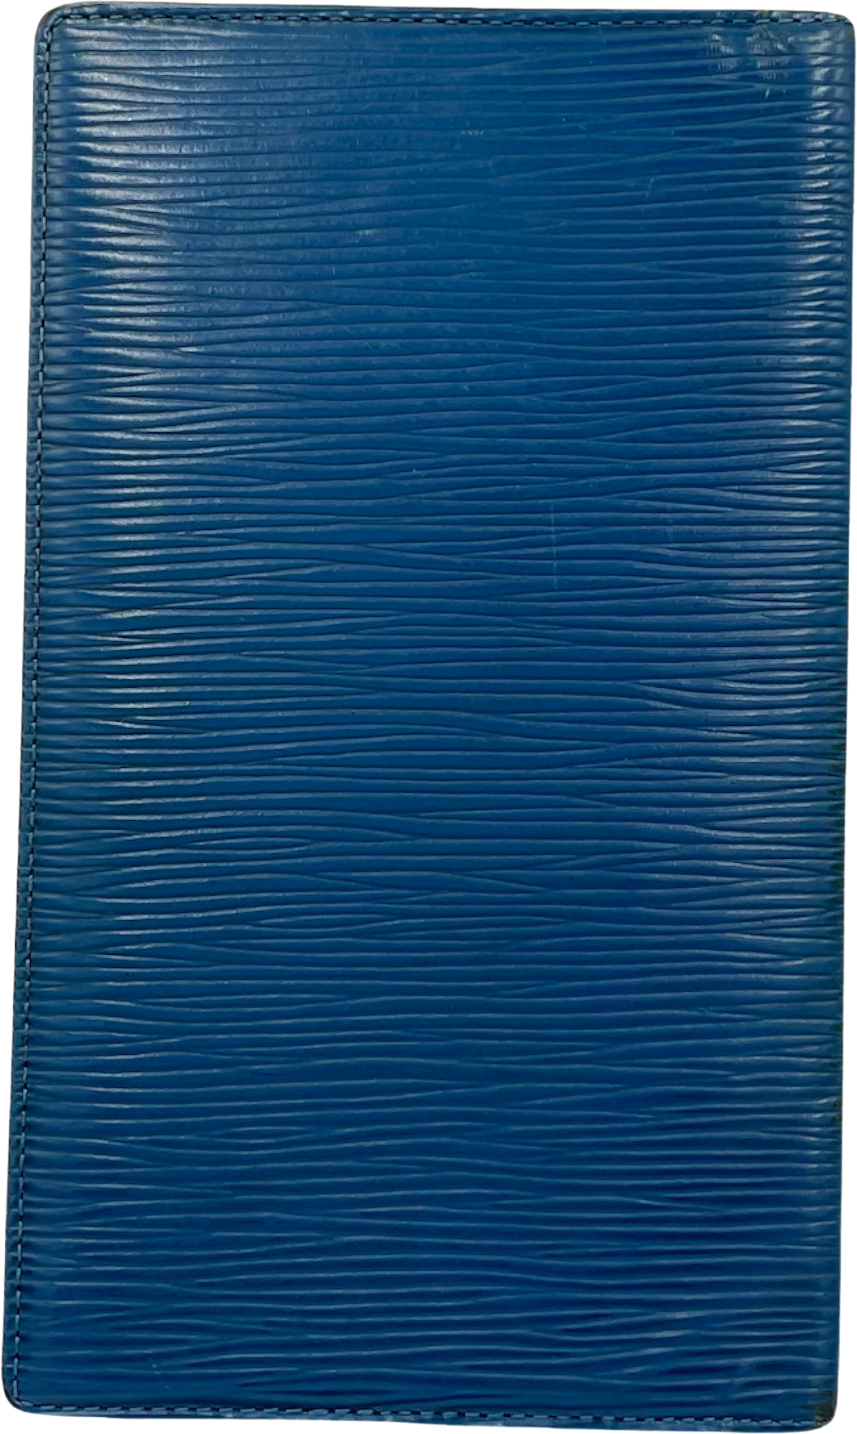 lv passport holder blue